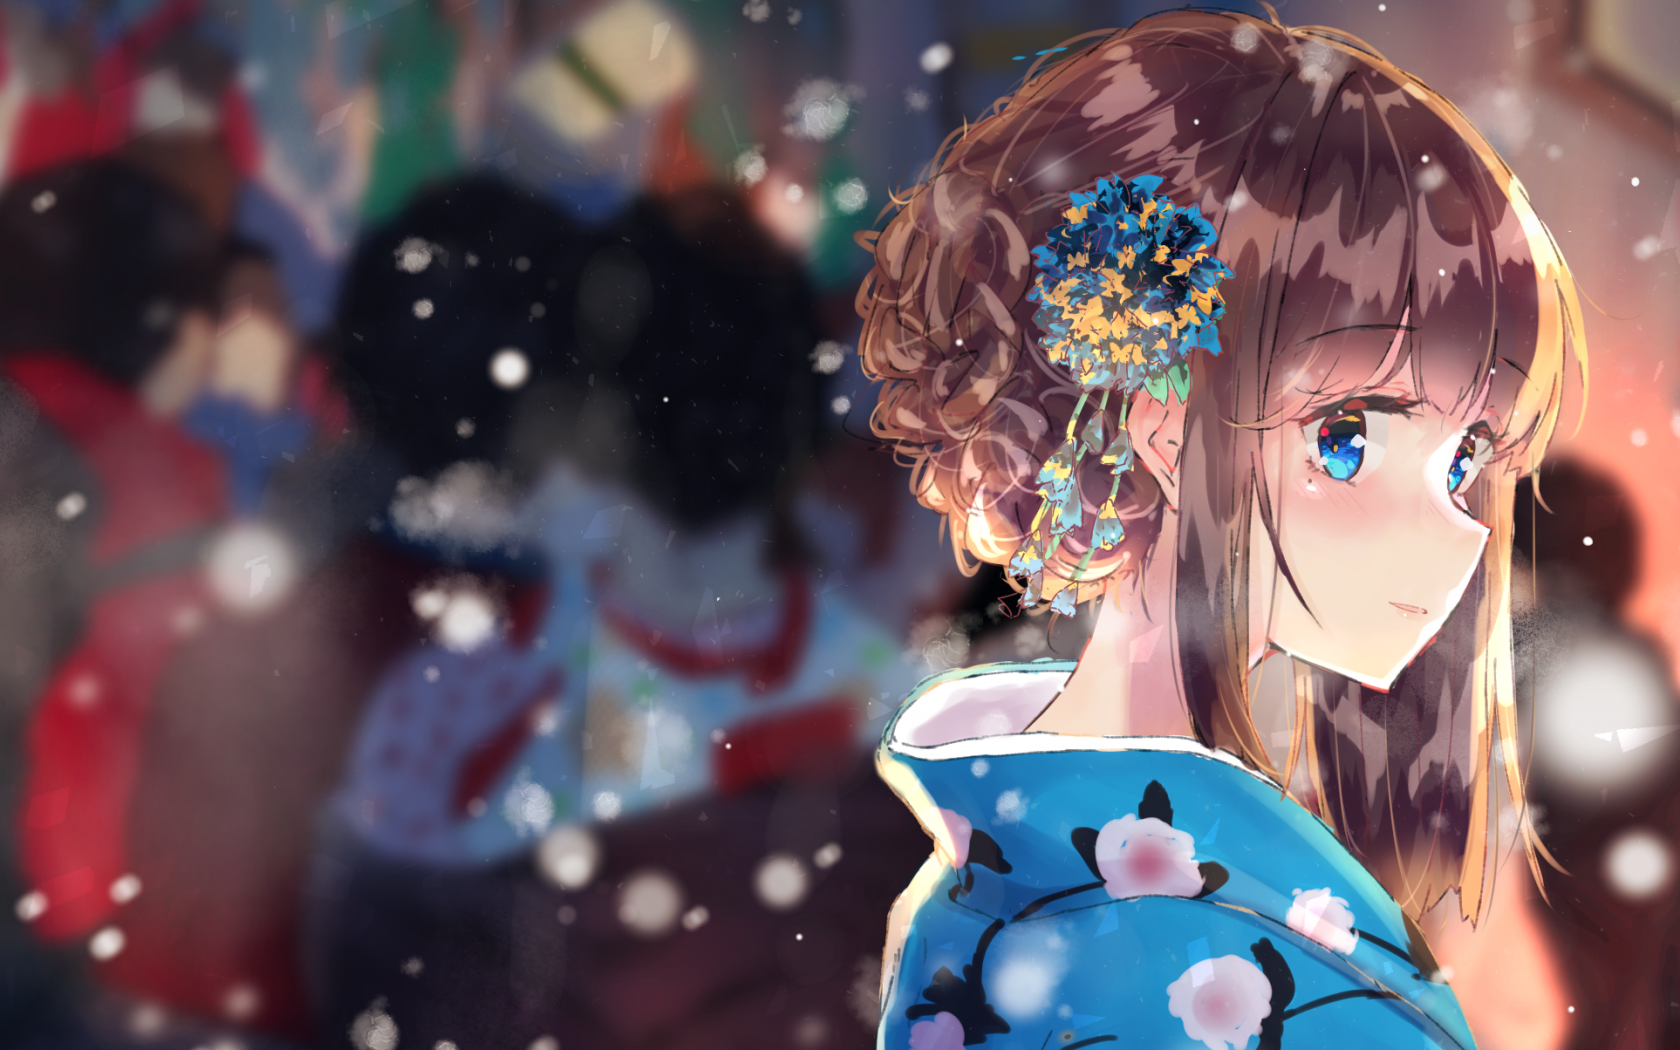 Download 1680x1050 Anime Girl, Brown Hair, Kimono, Snow, Blue Eyes, Profile View Wallpaper for MacBook Pro 15 inch